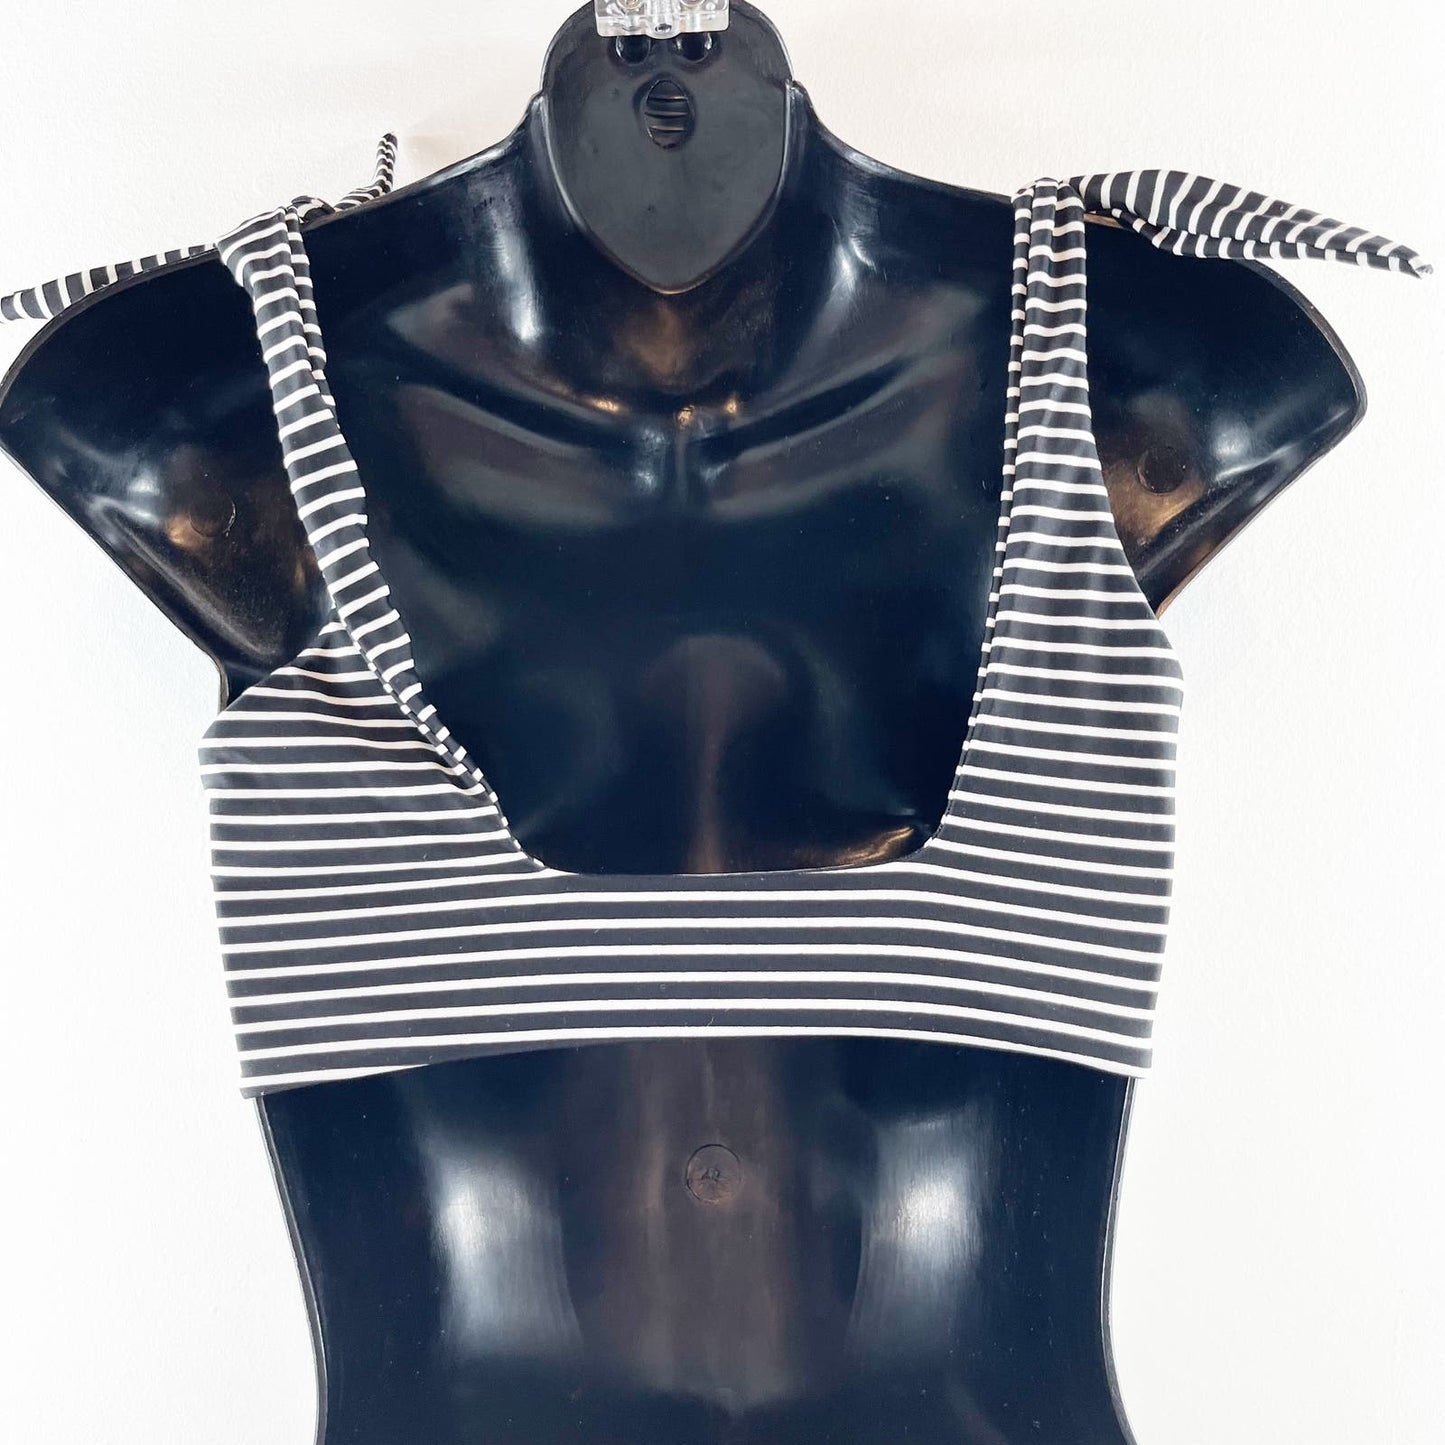 MIKOH Jamaica Bikini Top and Zuma Striped Bottoms Swimsuit Black White Medium